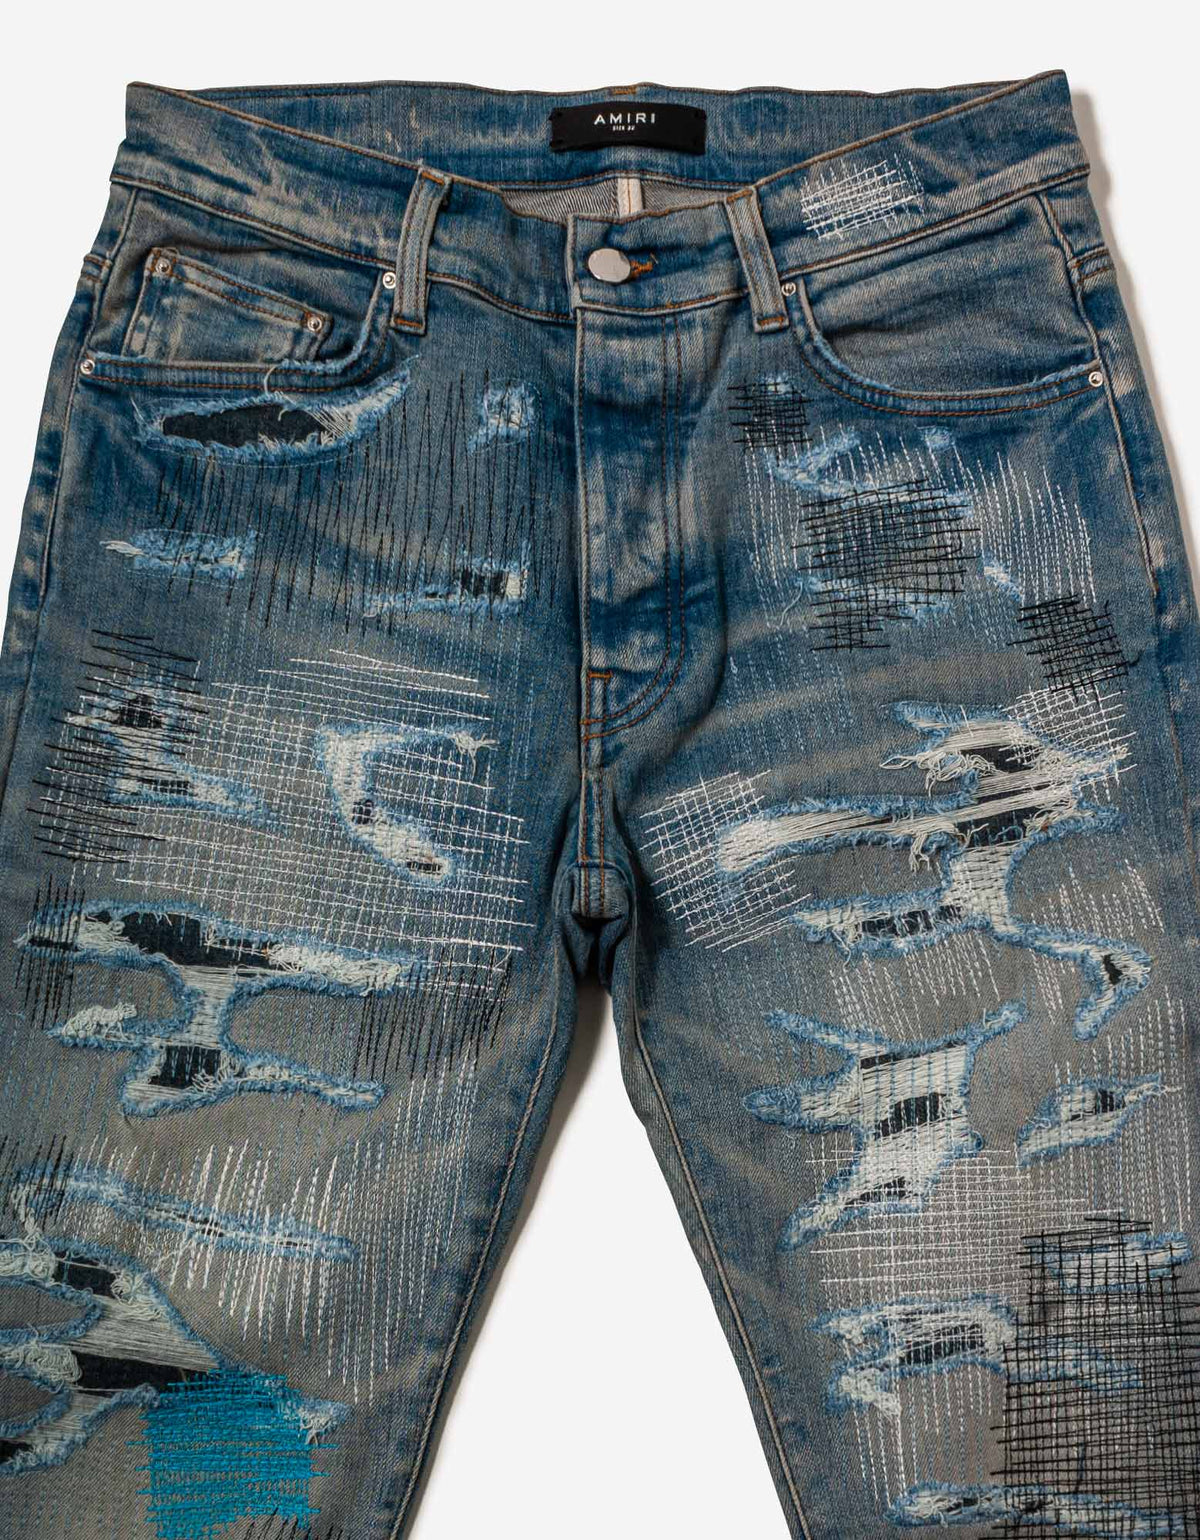 Amiri Jeans All Over Repair Clay Indigo